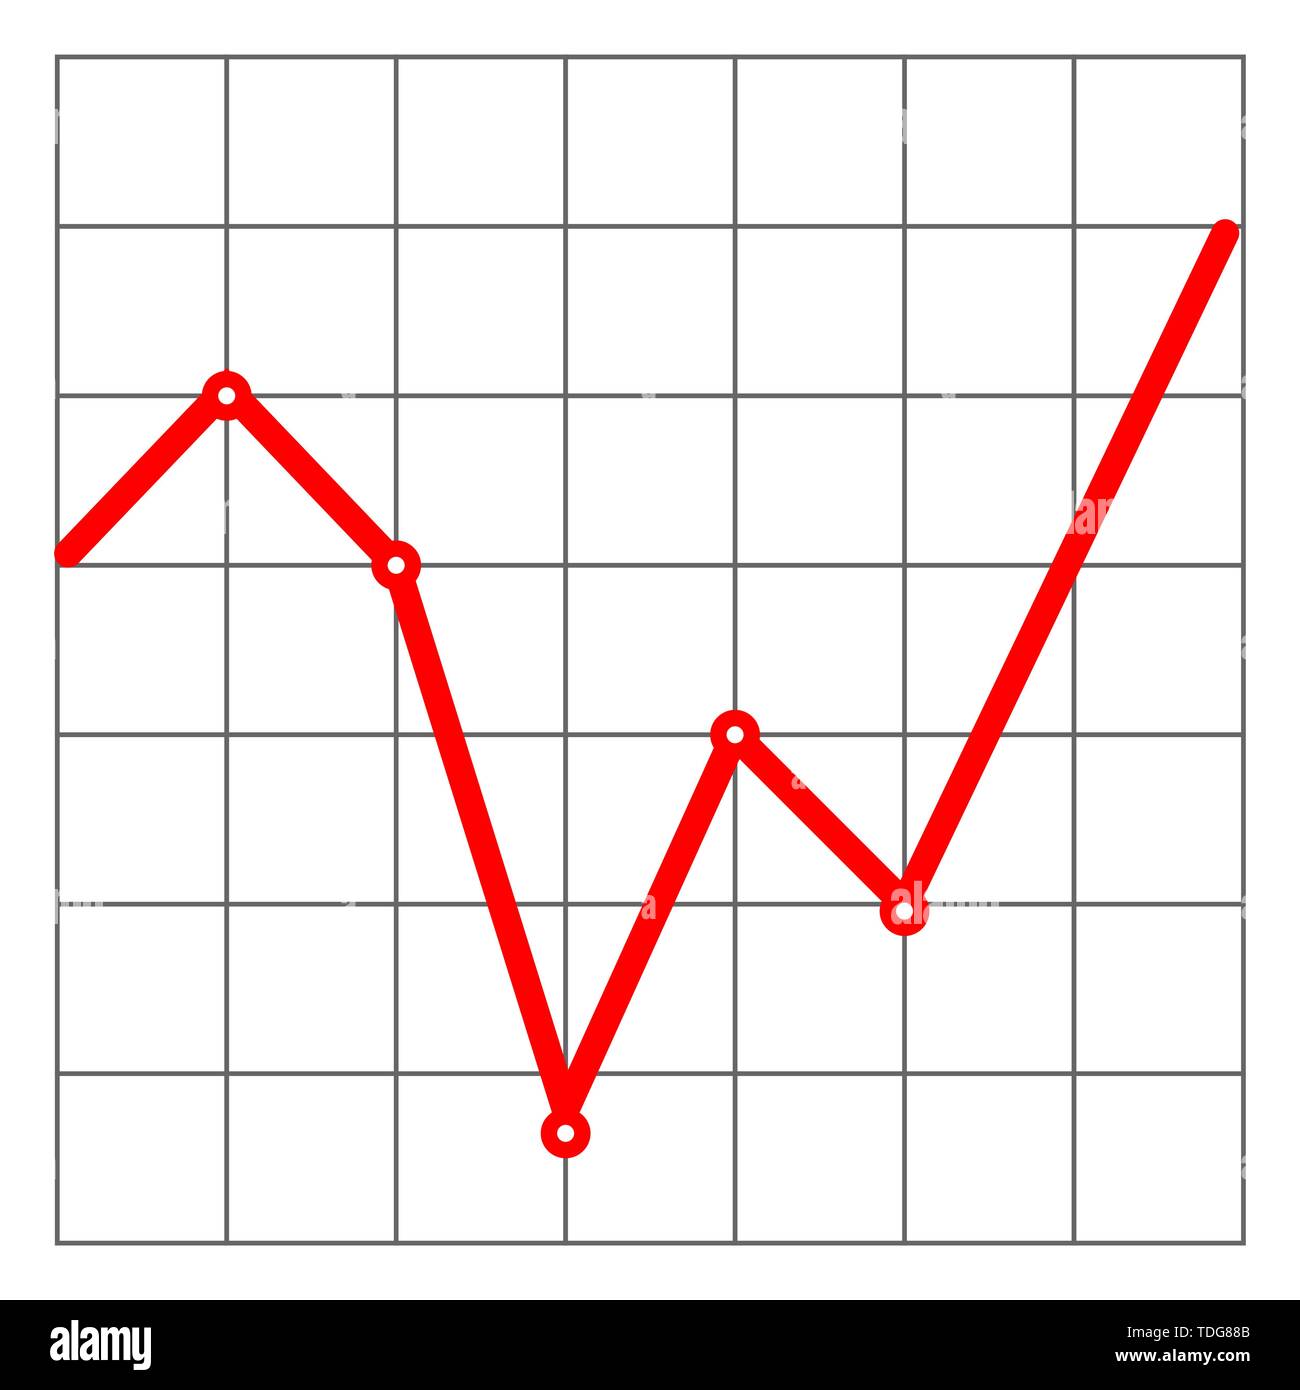 Ala Stock Chart